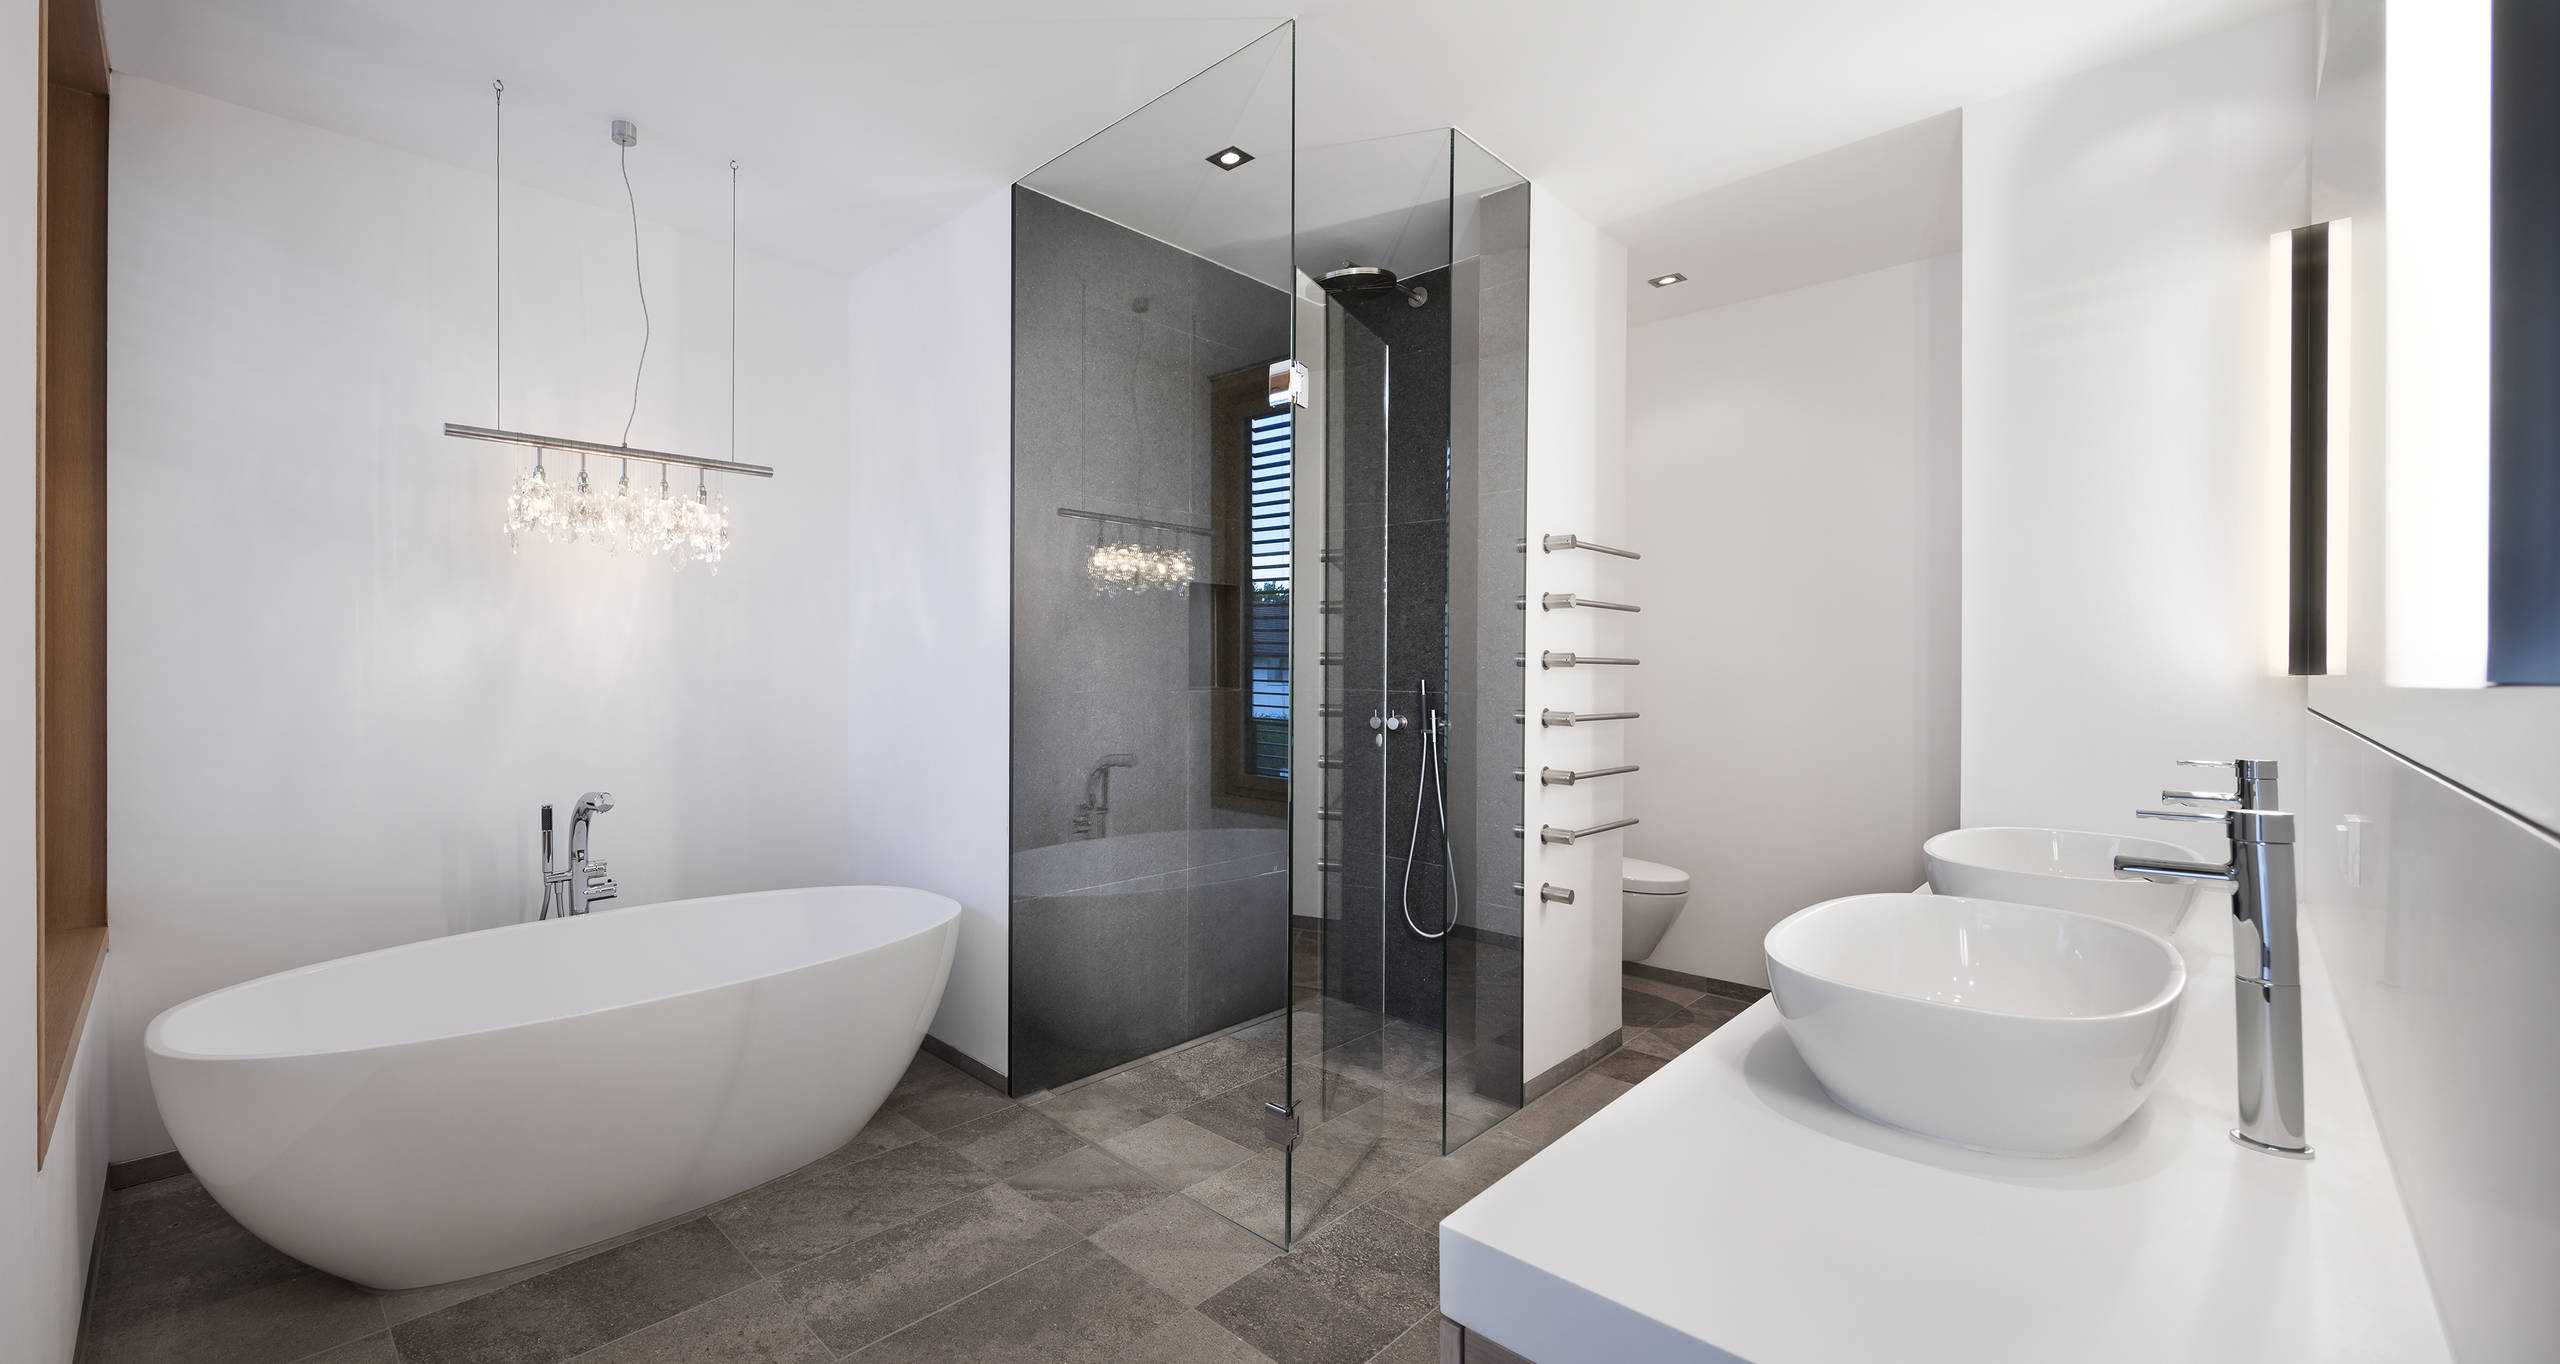 18 Extraordinary Modern Bathroom Interior Designs You'll